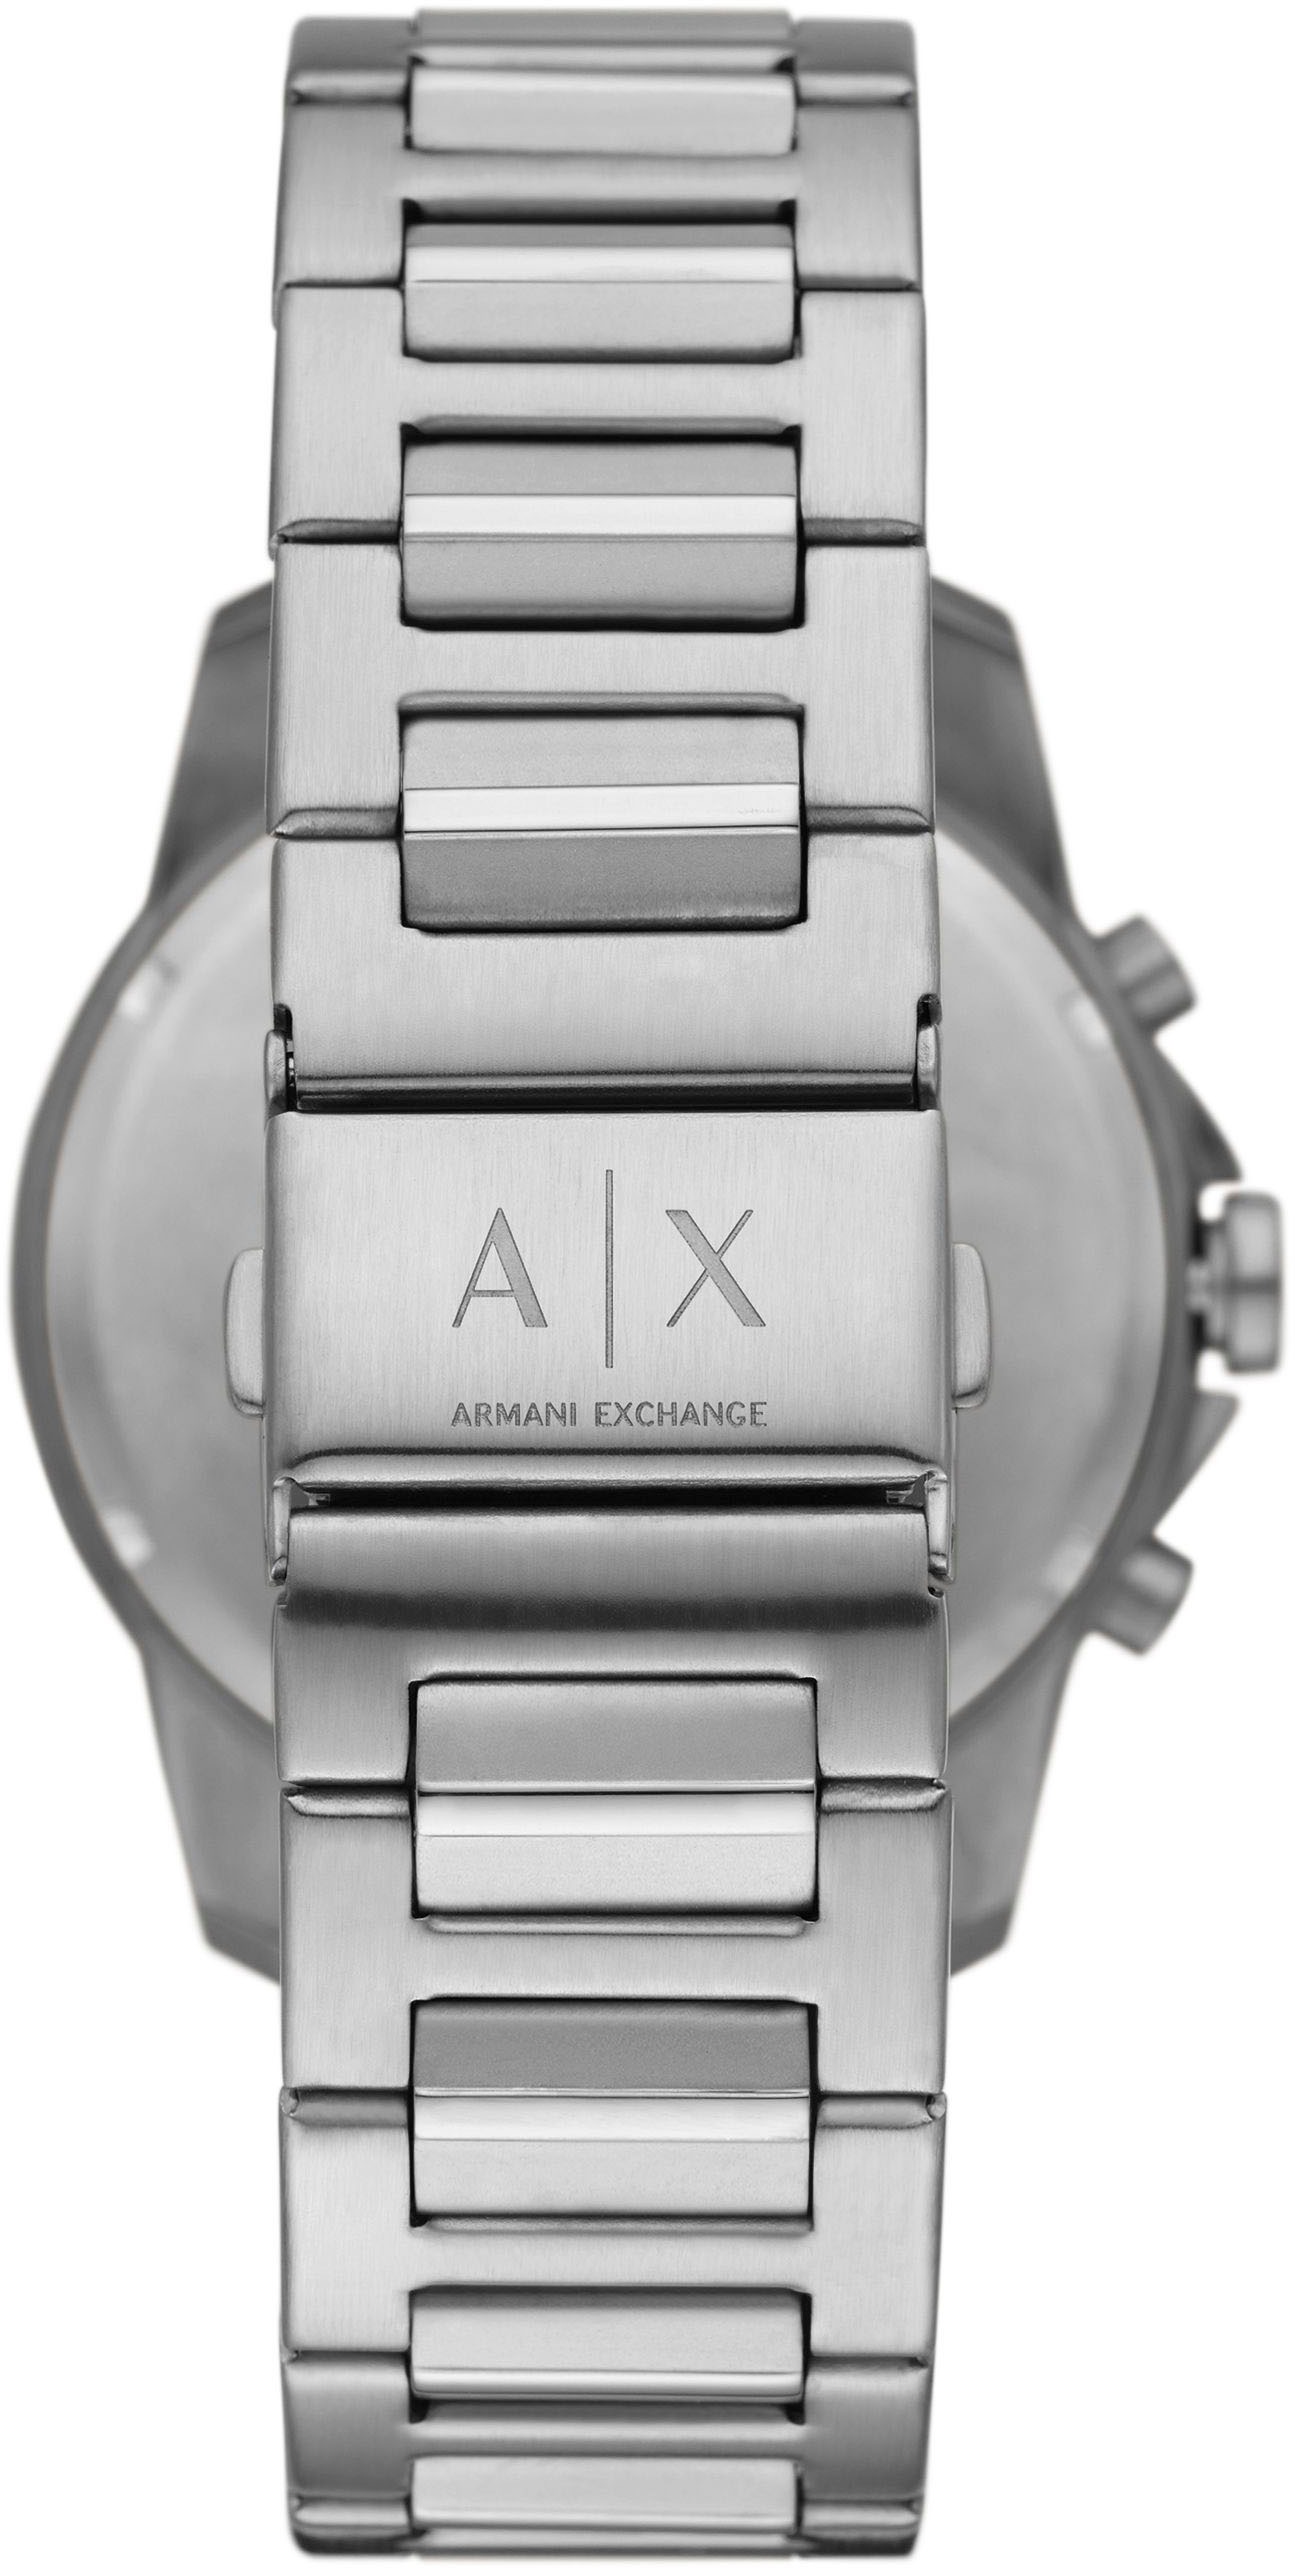 ARMANI EXCHANGE »AX1742« ▷ BAUR Chronograph für 